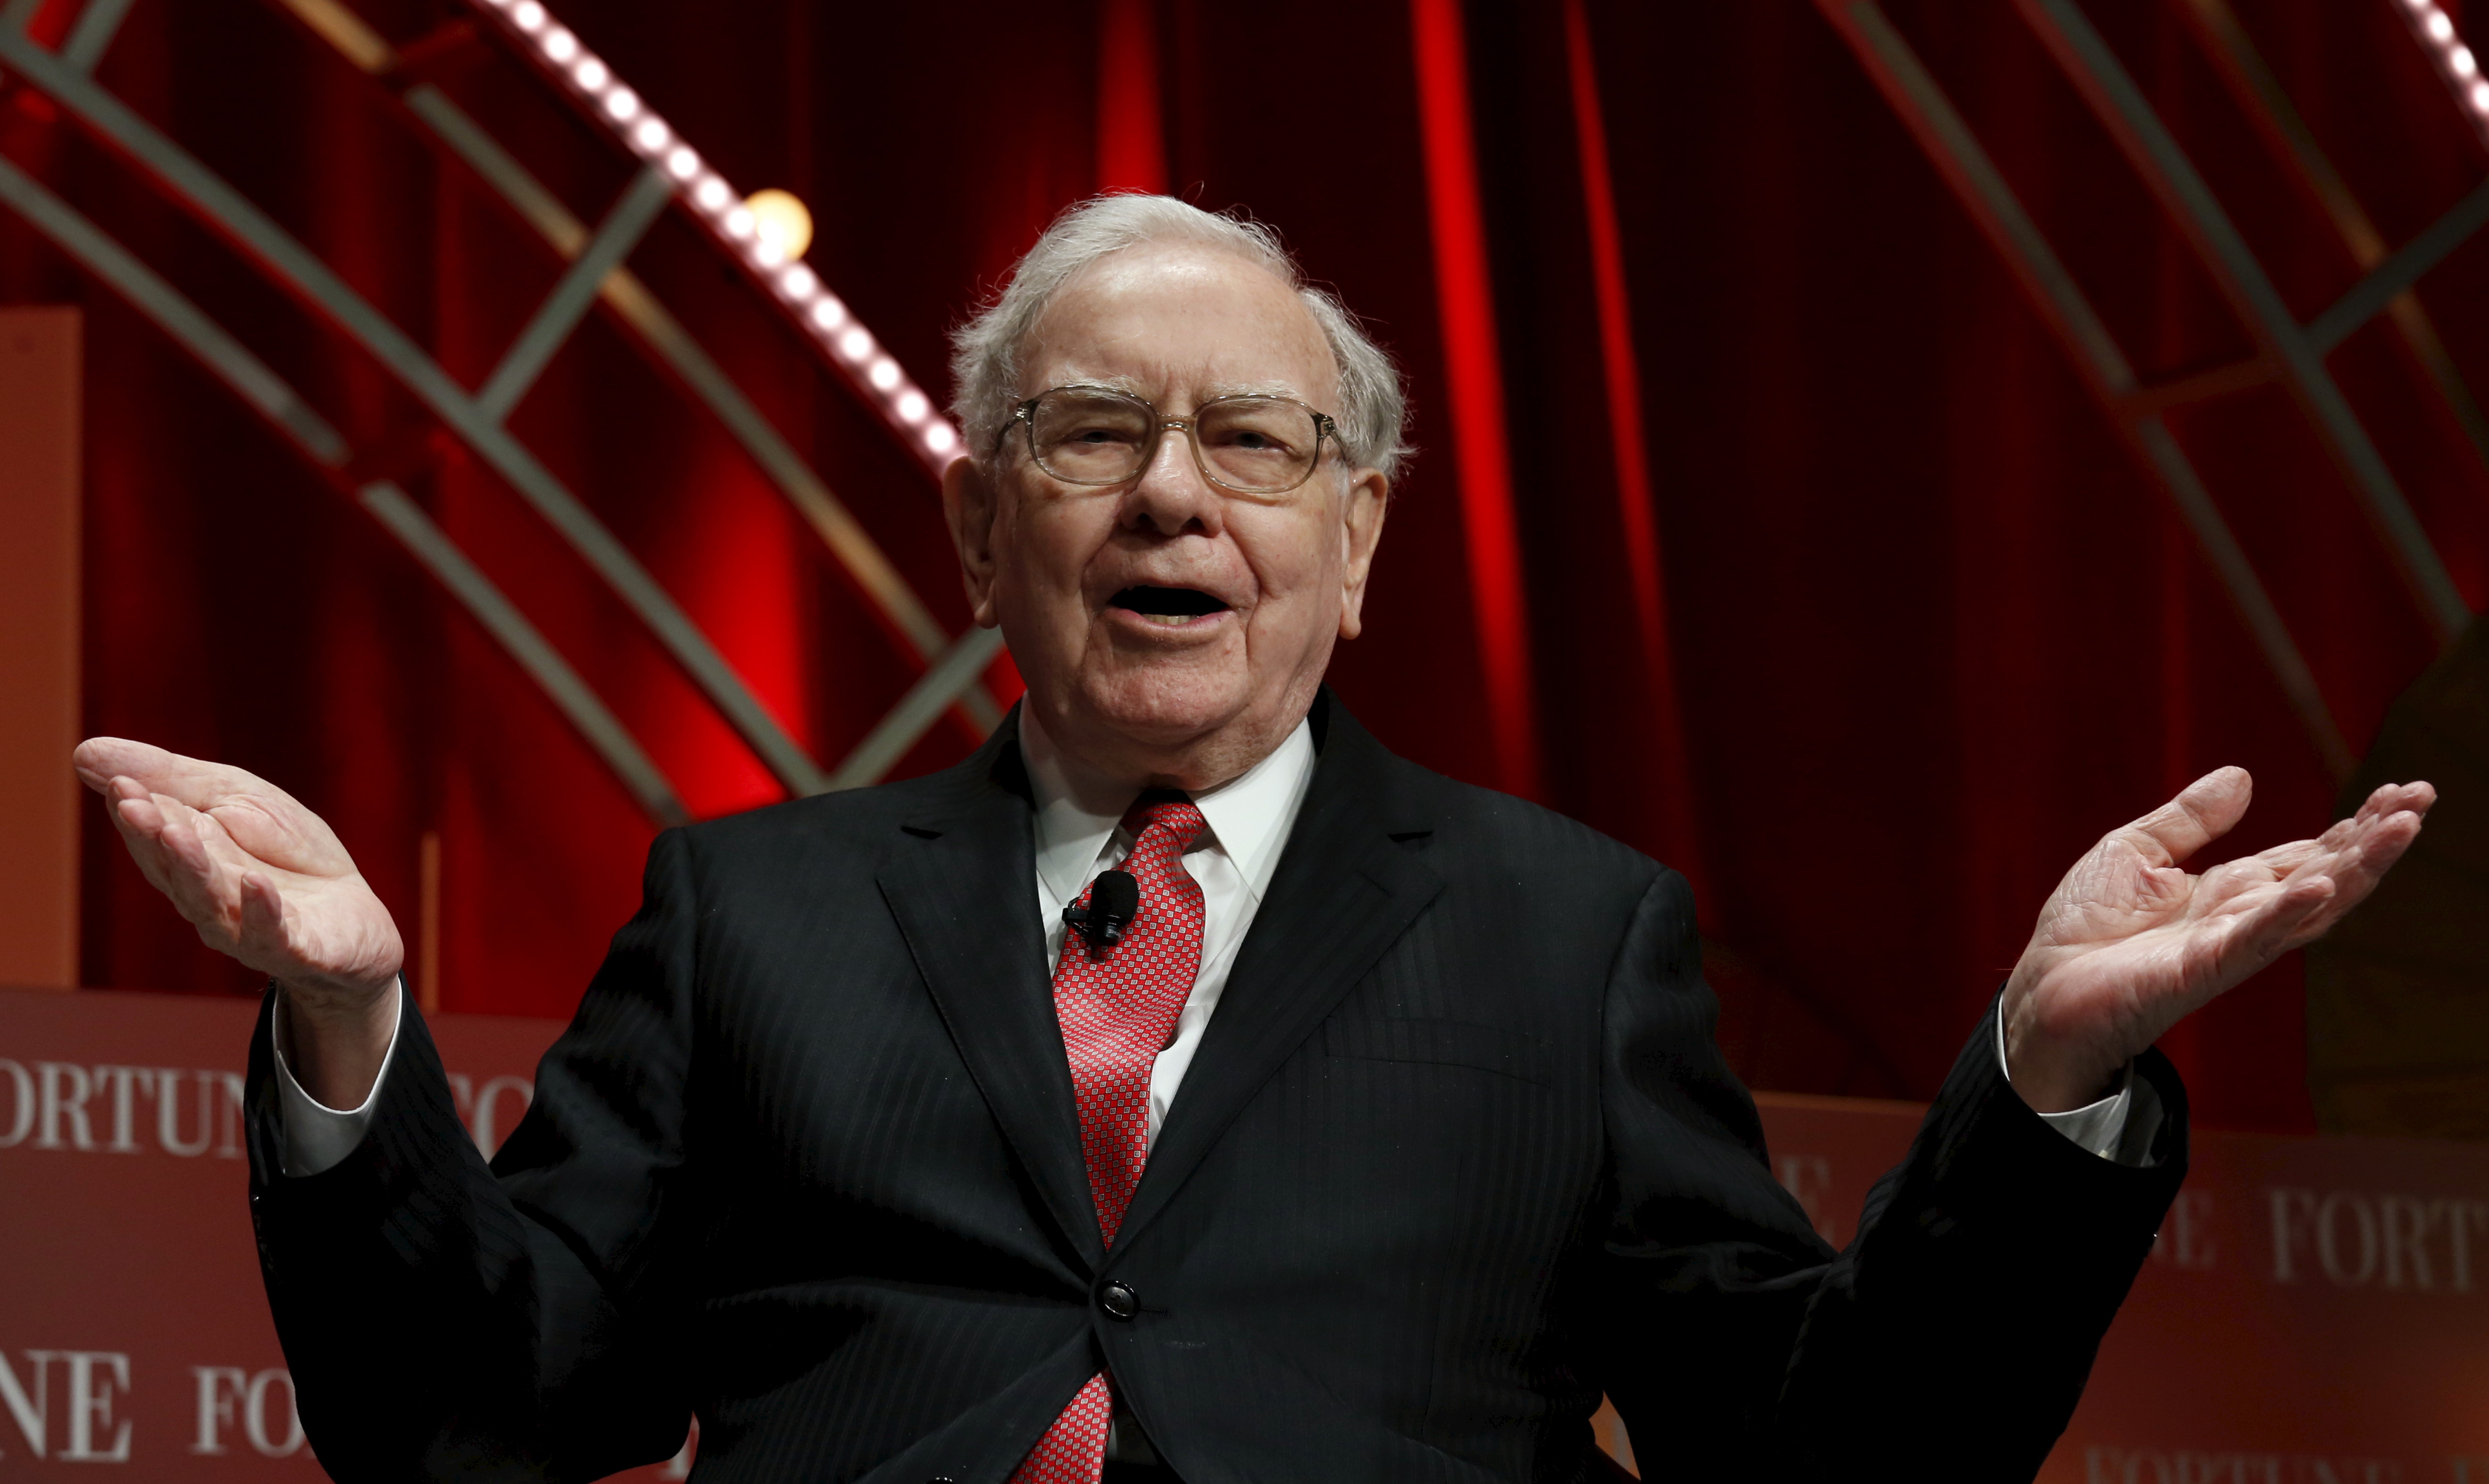 Warren Buffett, 85, chairman and CEO of Berkshire Hathaway, speaks at the Fortune&#039;s Most Powerful Women&#039;s Summit in Washington